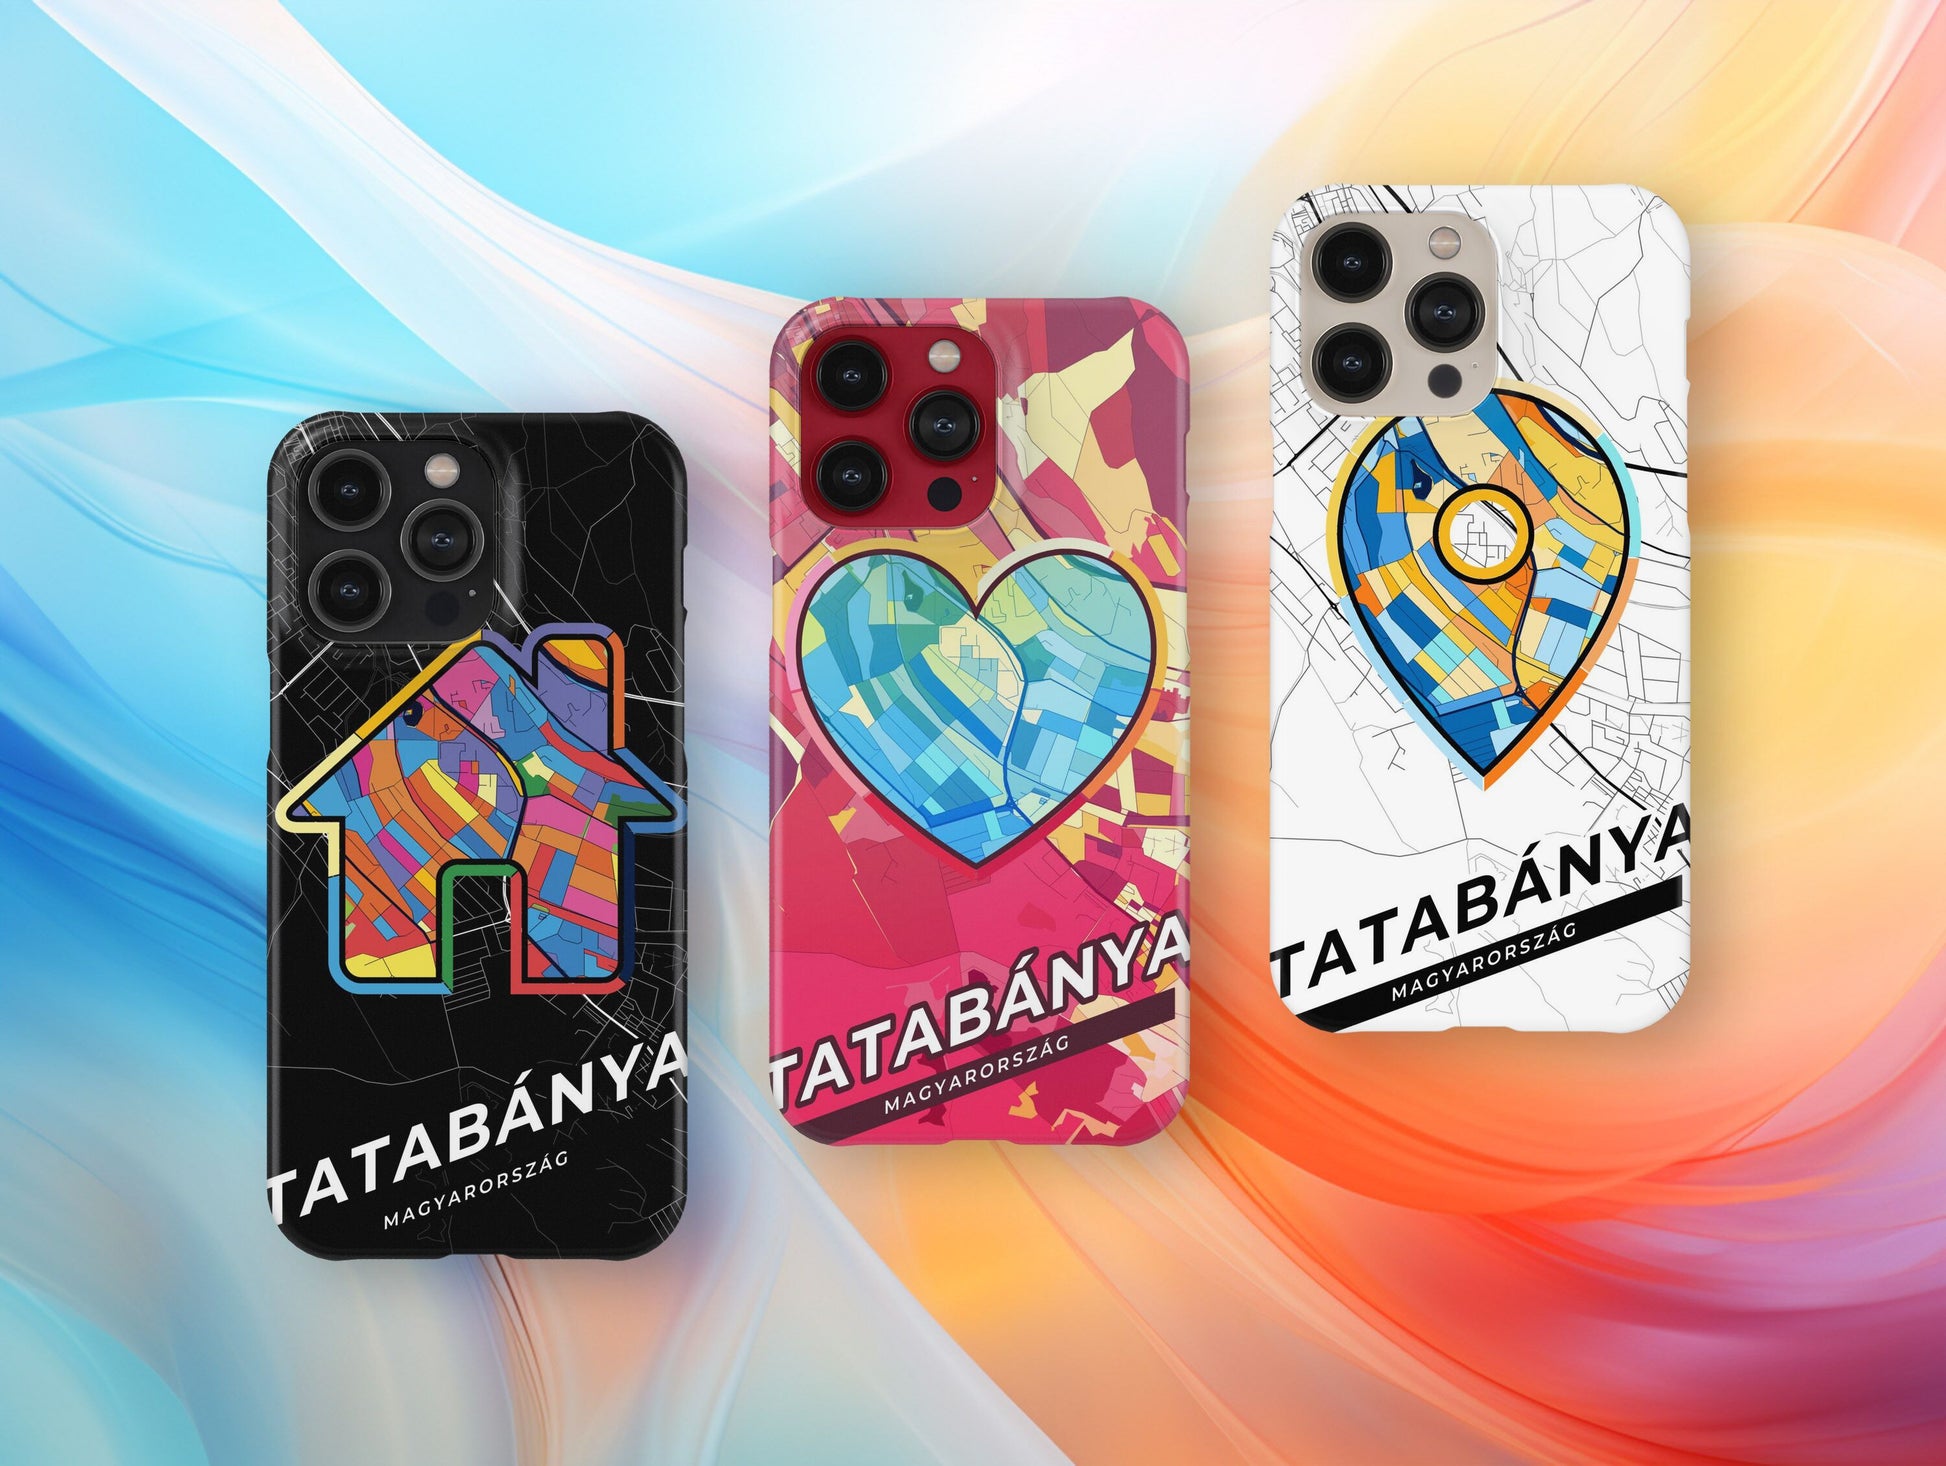 Tatabánya Hungary slim phone case with colorful icon